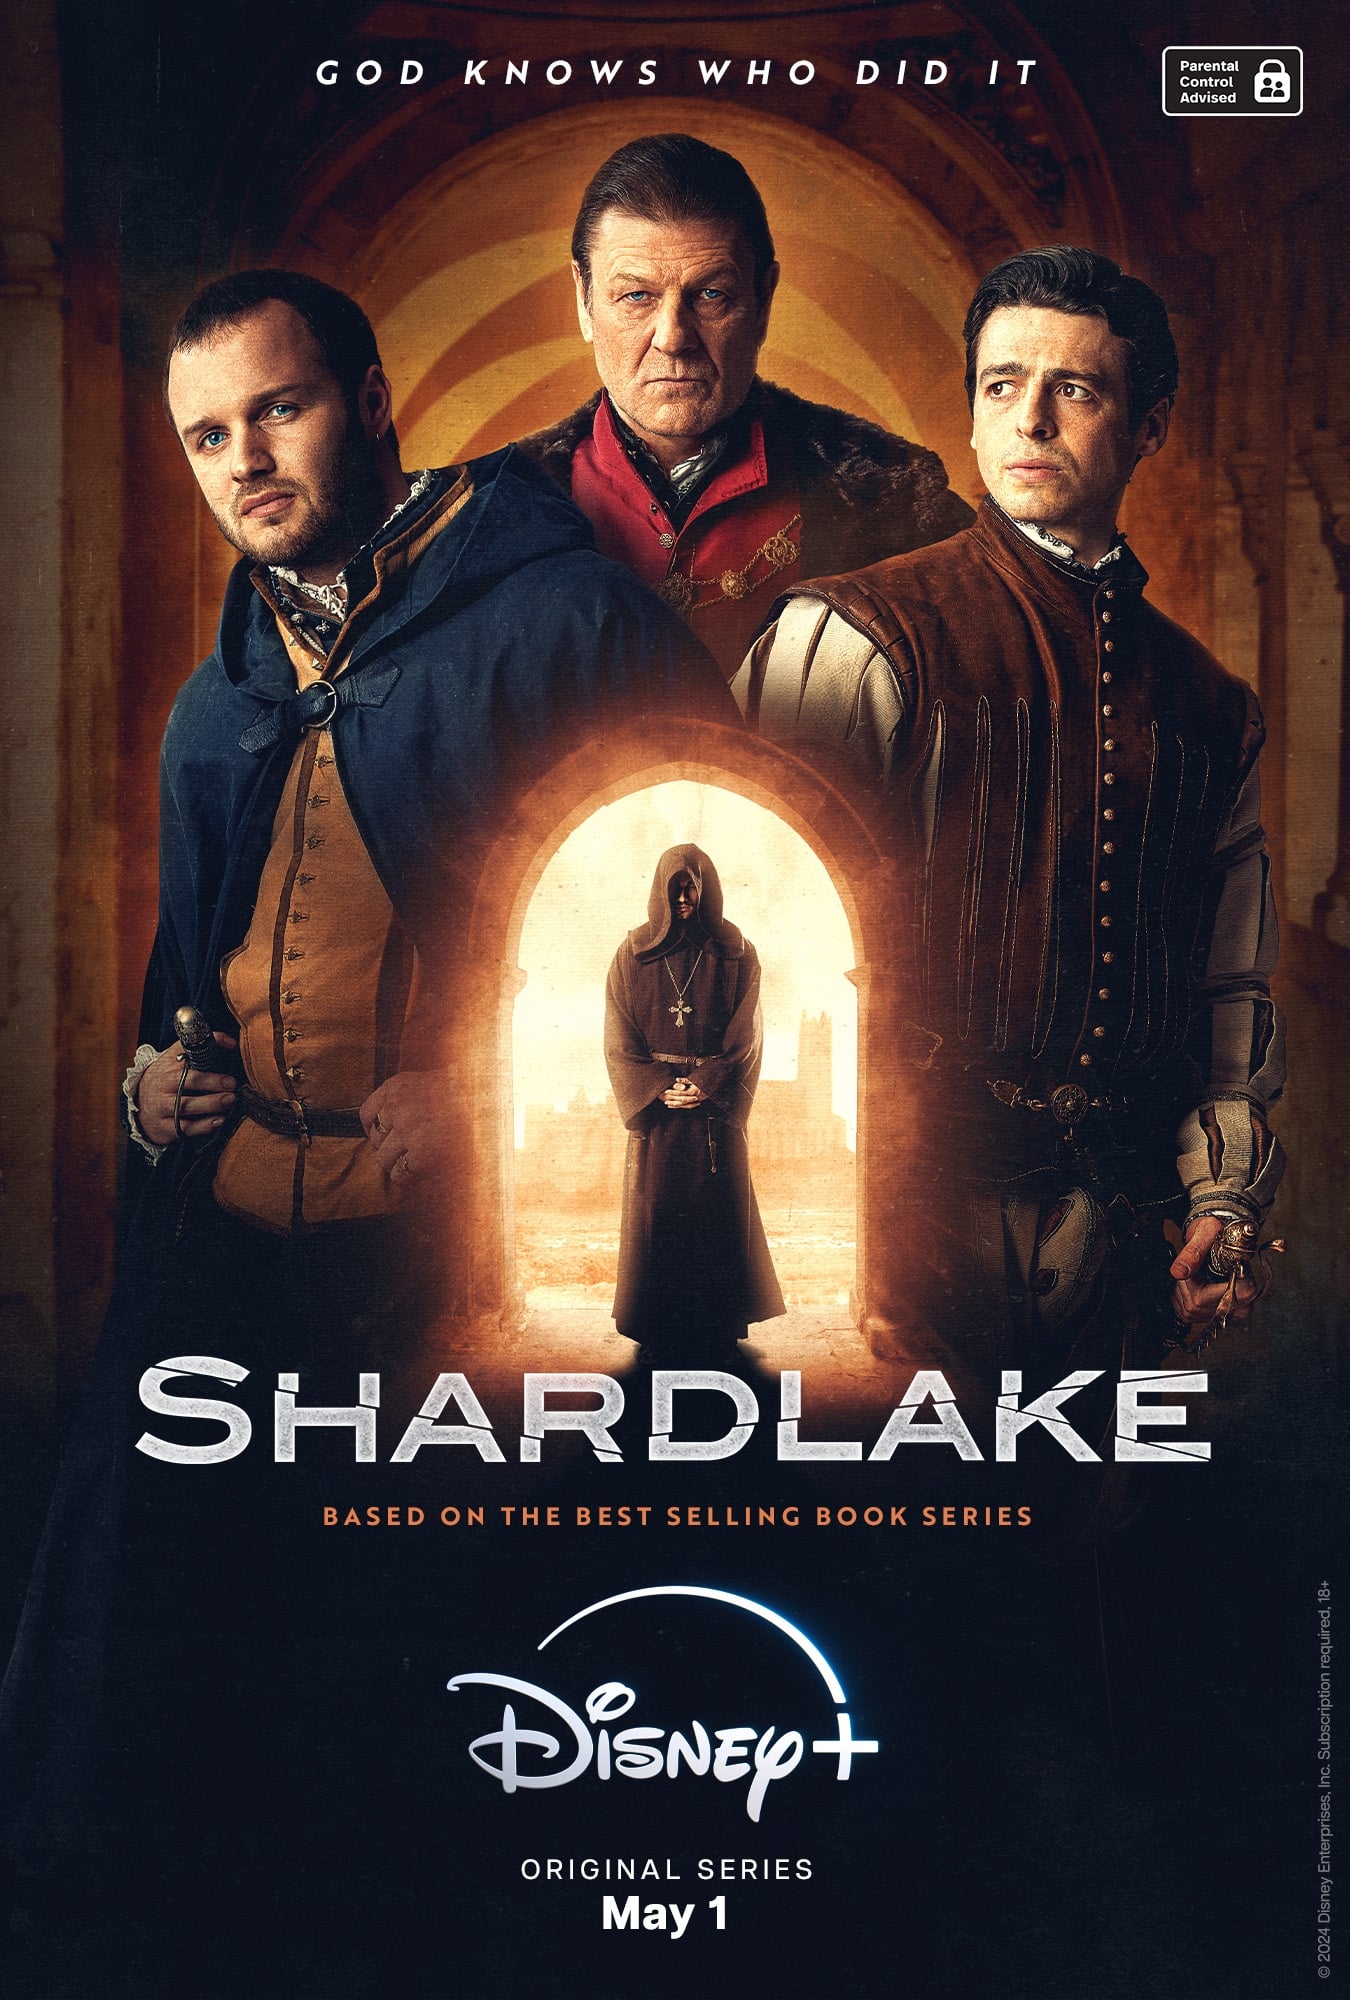 Plakát pro film “Shardlake”